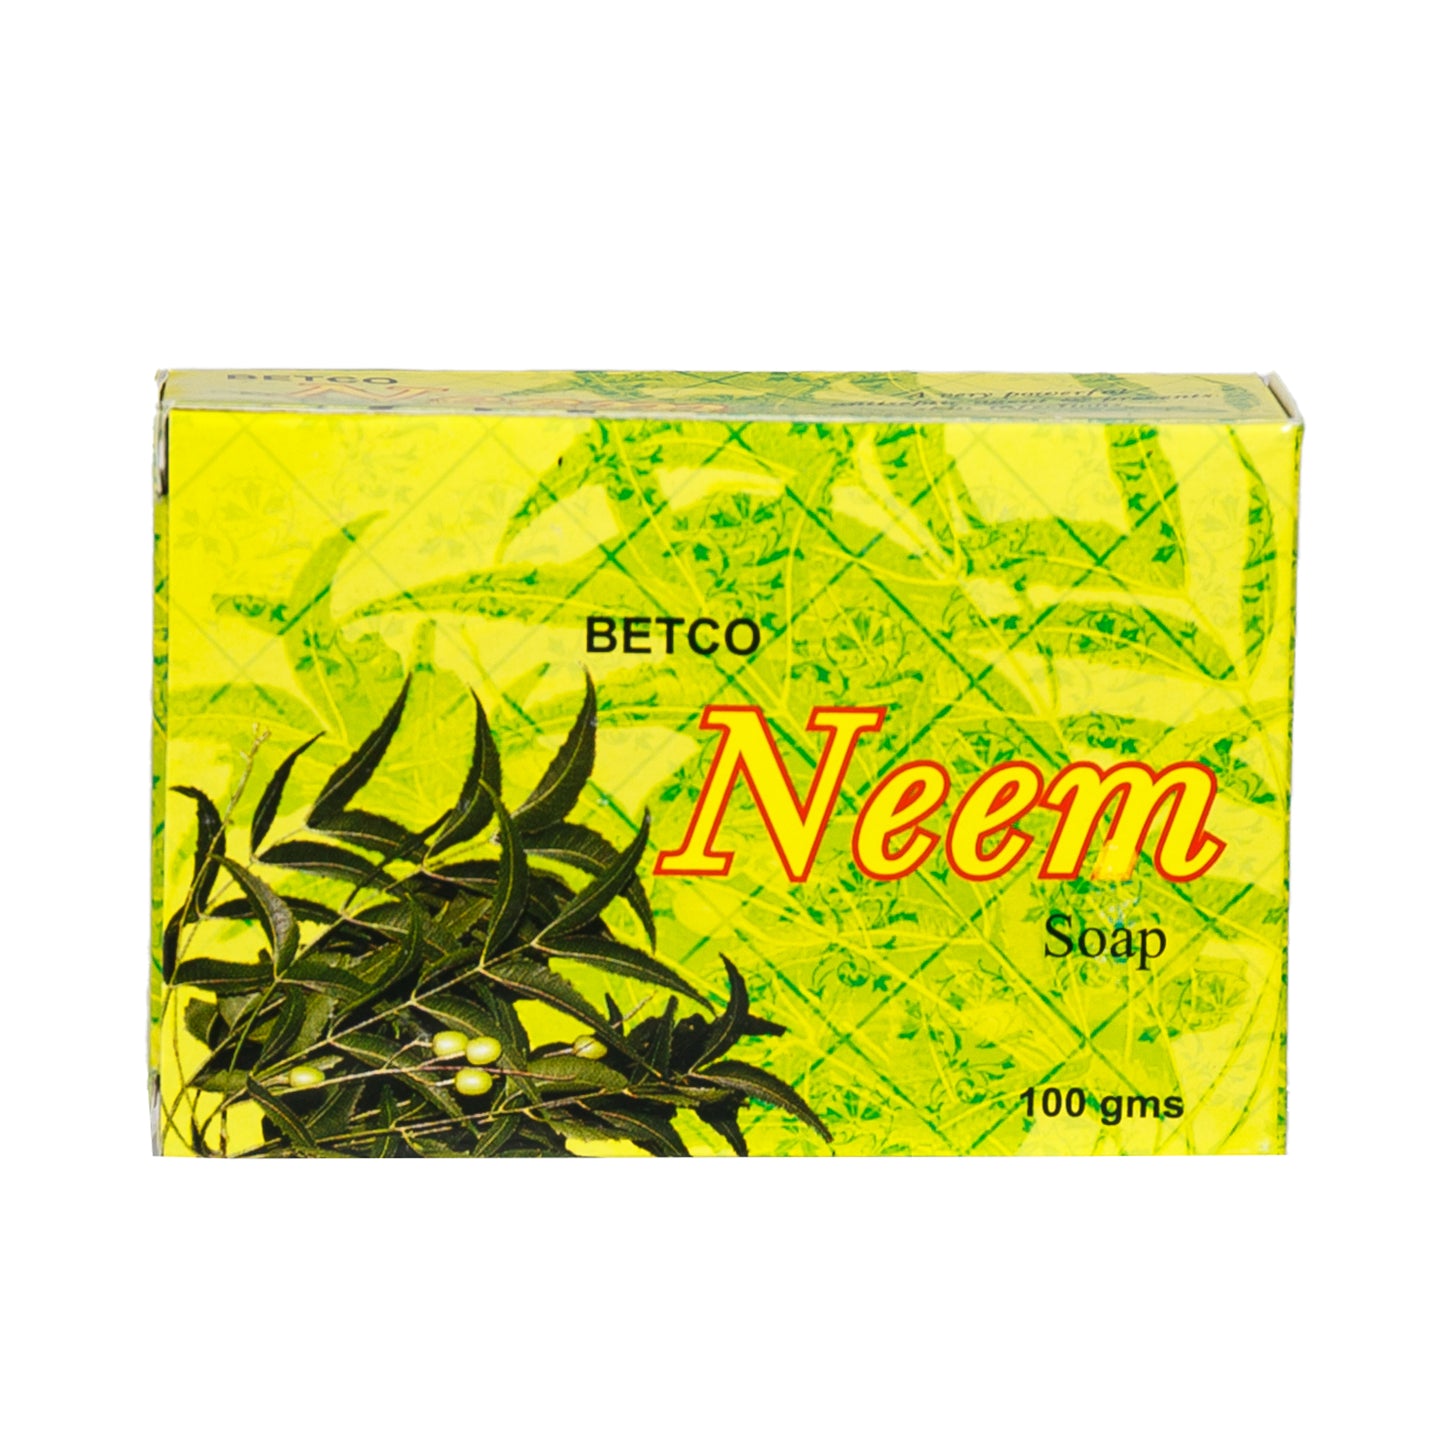 Primary Image of Original Neem Soap